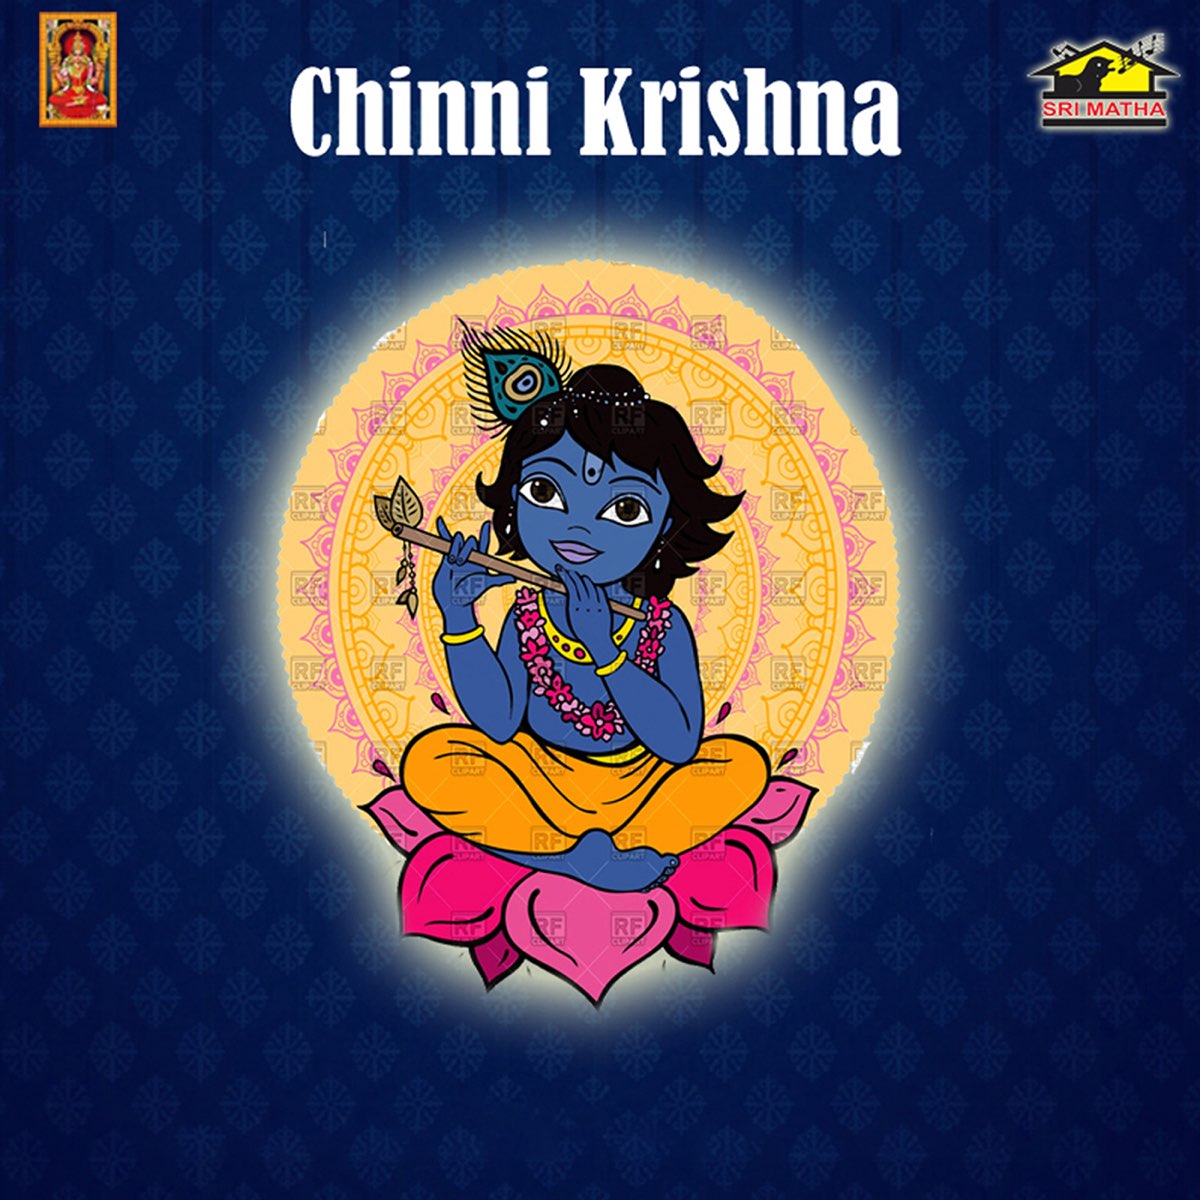 Chinni Krishna - Single by V. Akhila on Apple Music